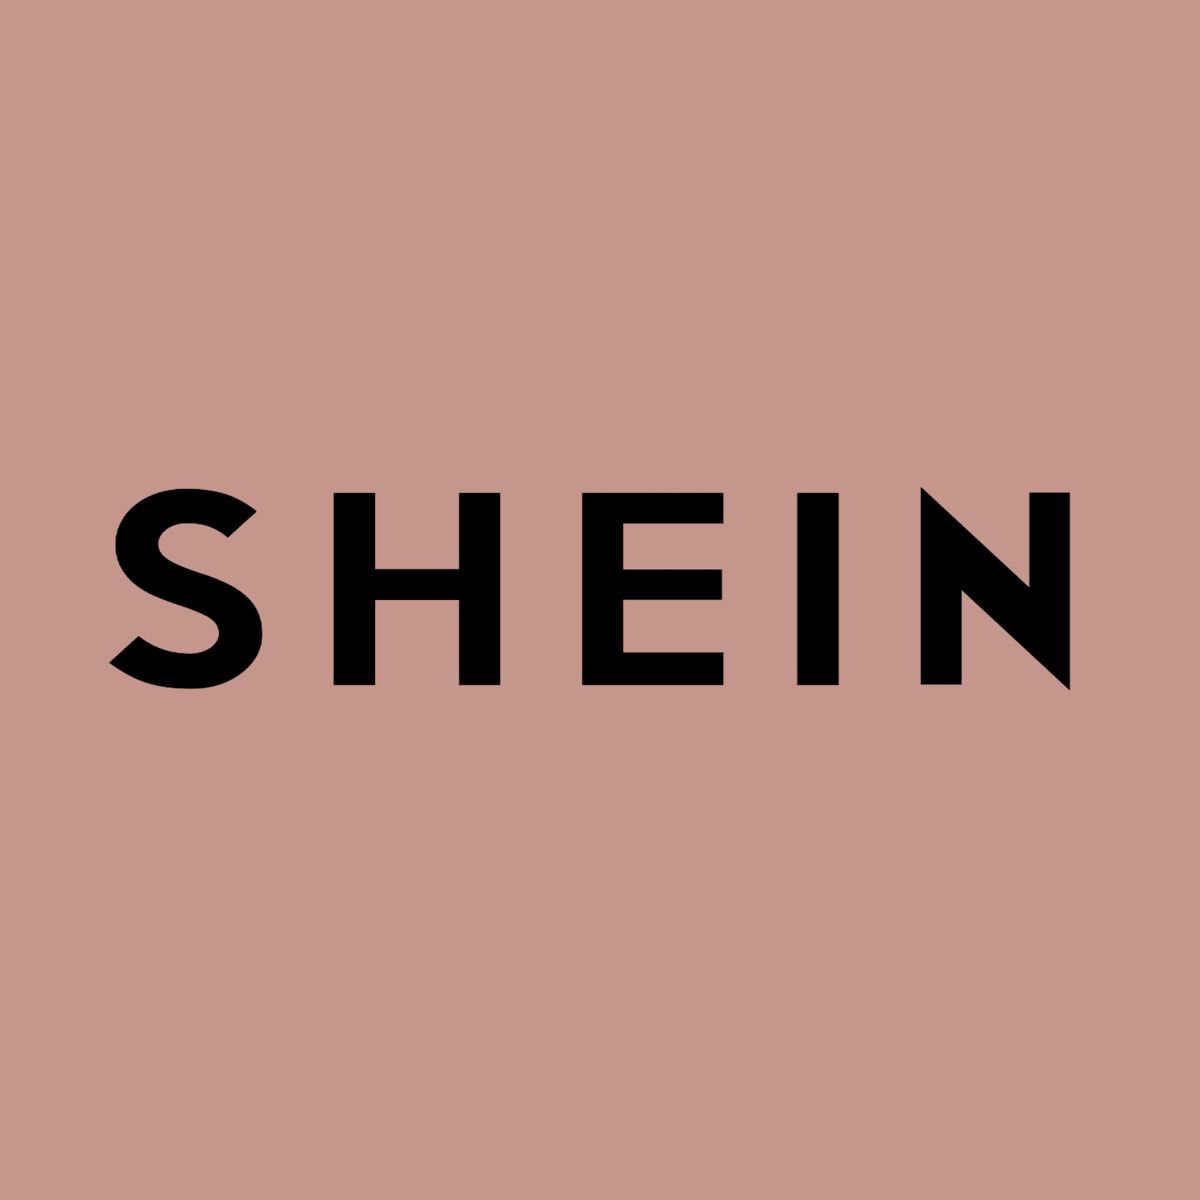 Aesthetic app icon Shein. App icon, iPhone photo app, iPhone icon